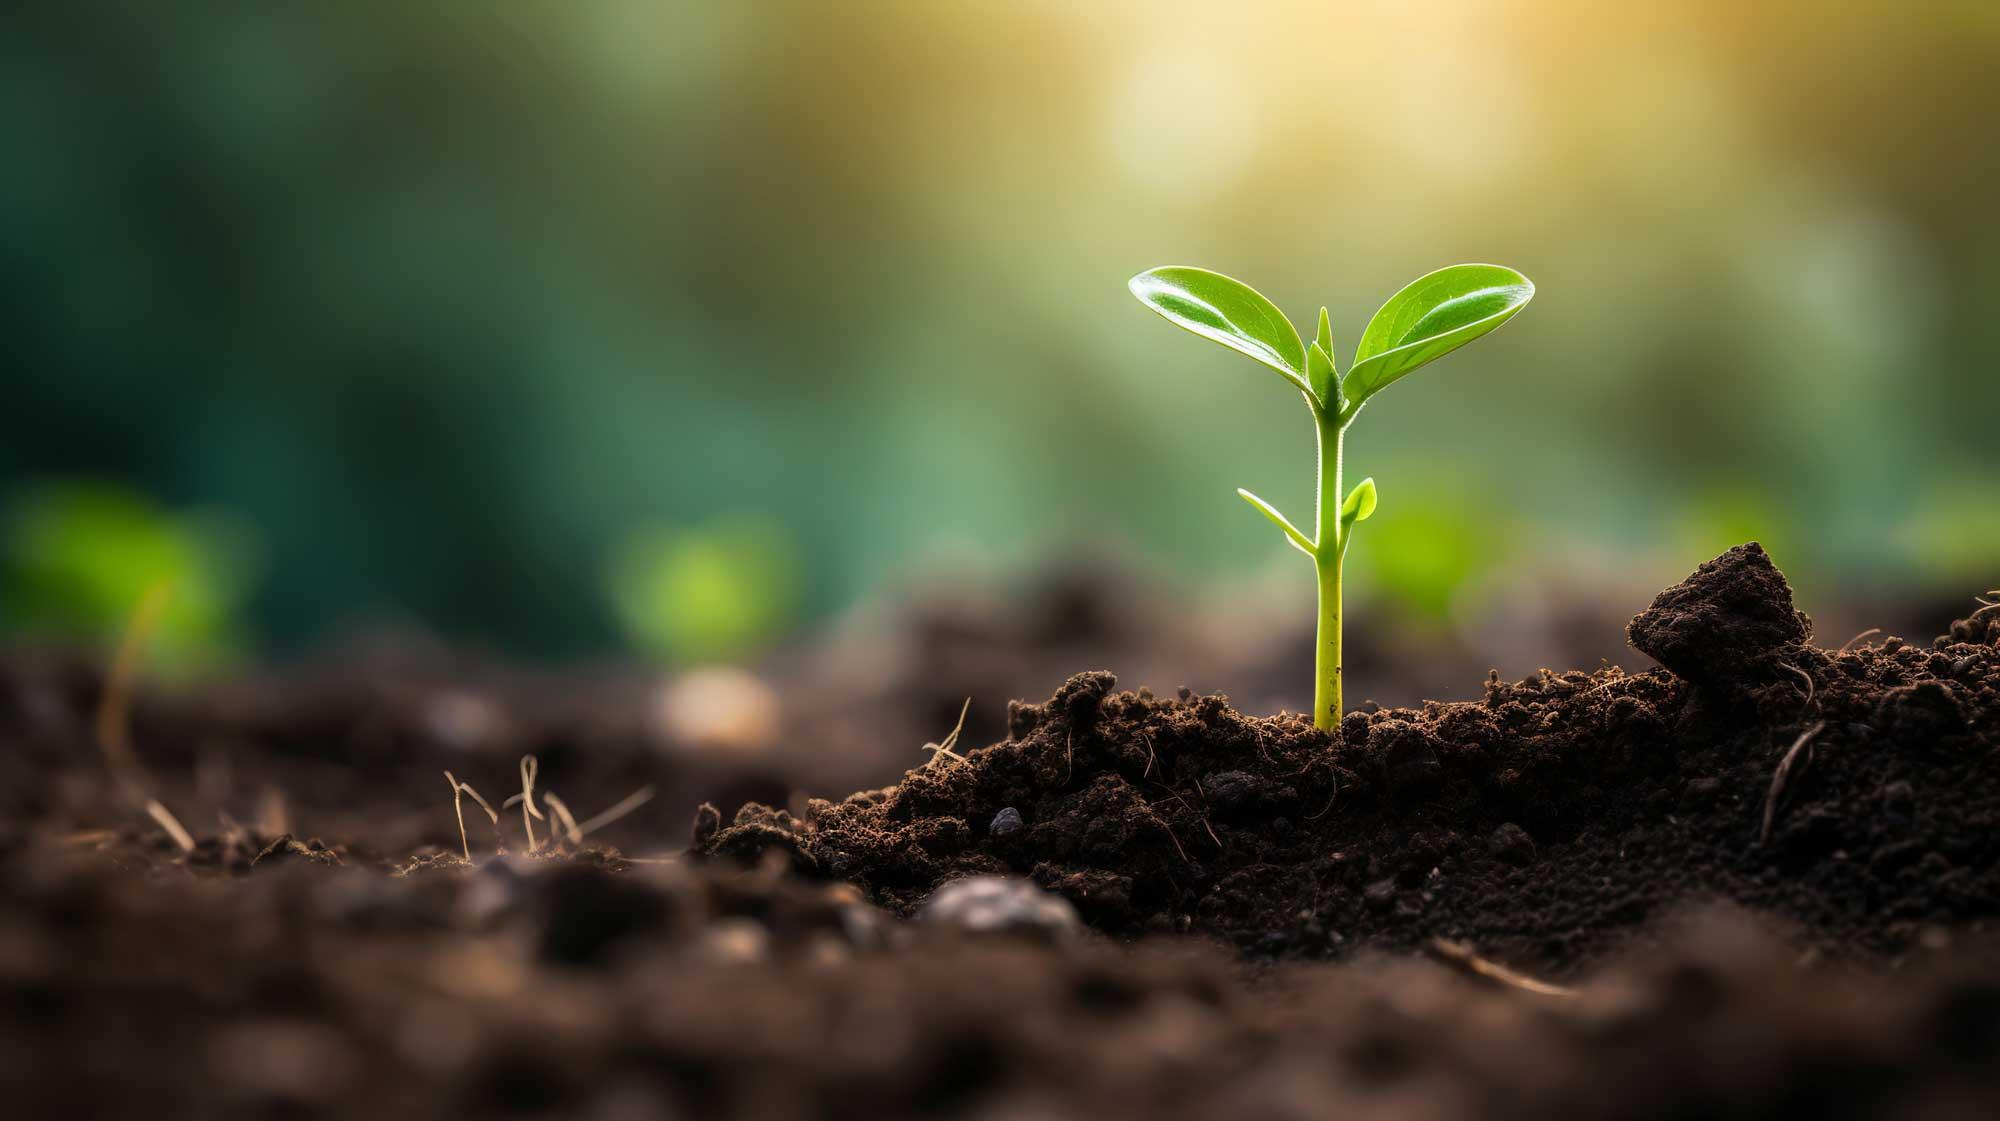 Seedlings Emerging With an Entrepreneurial Growth